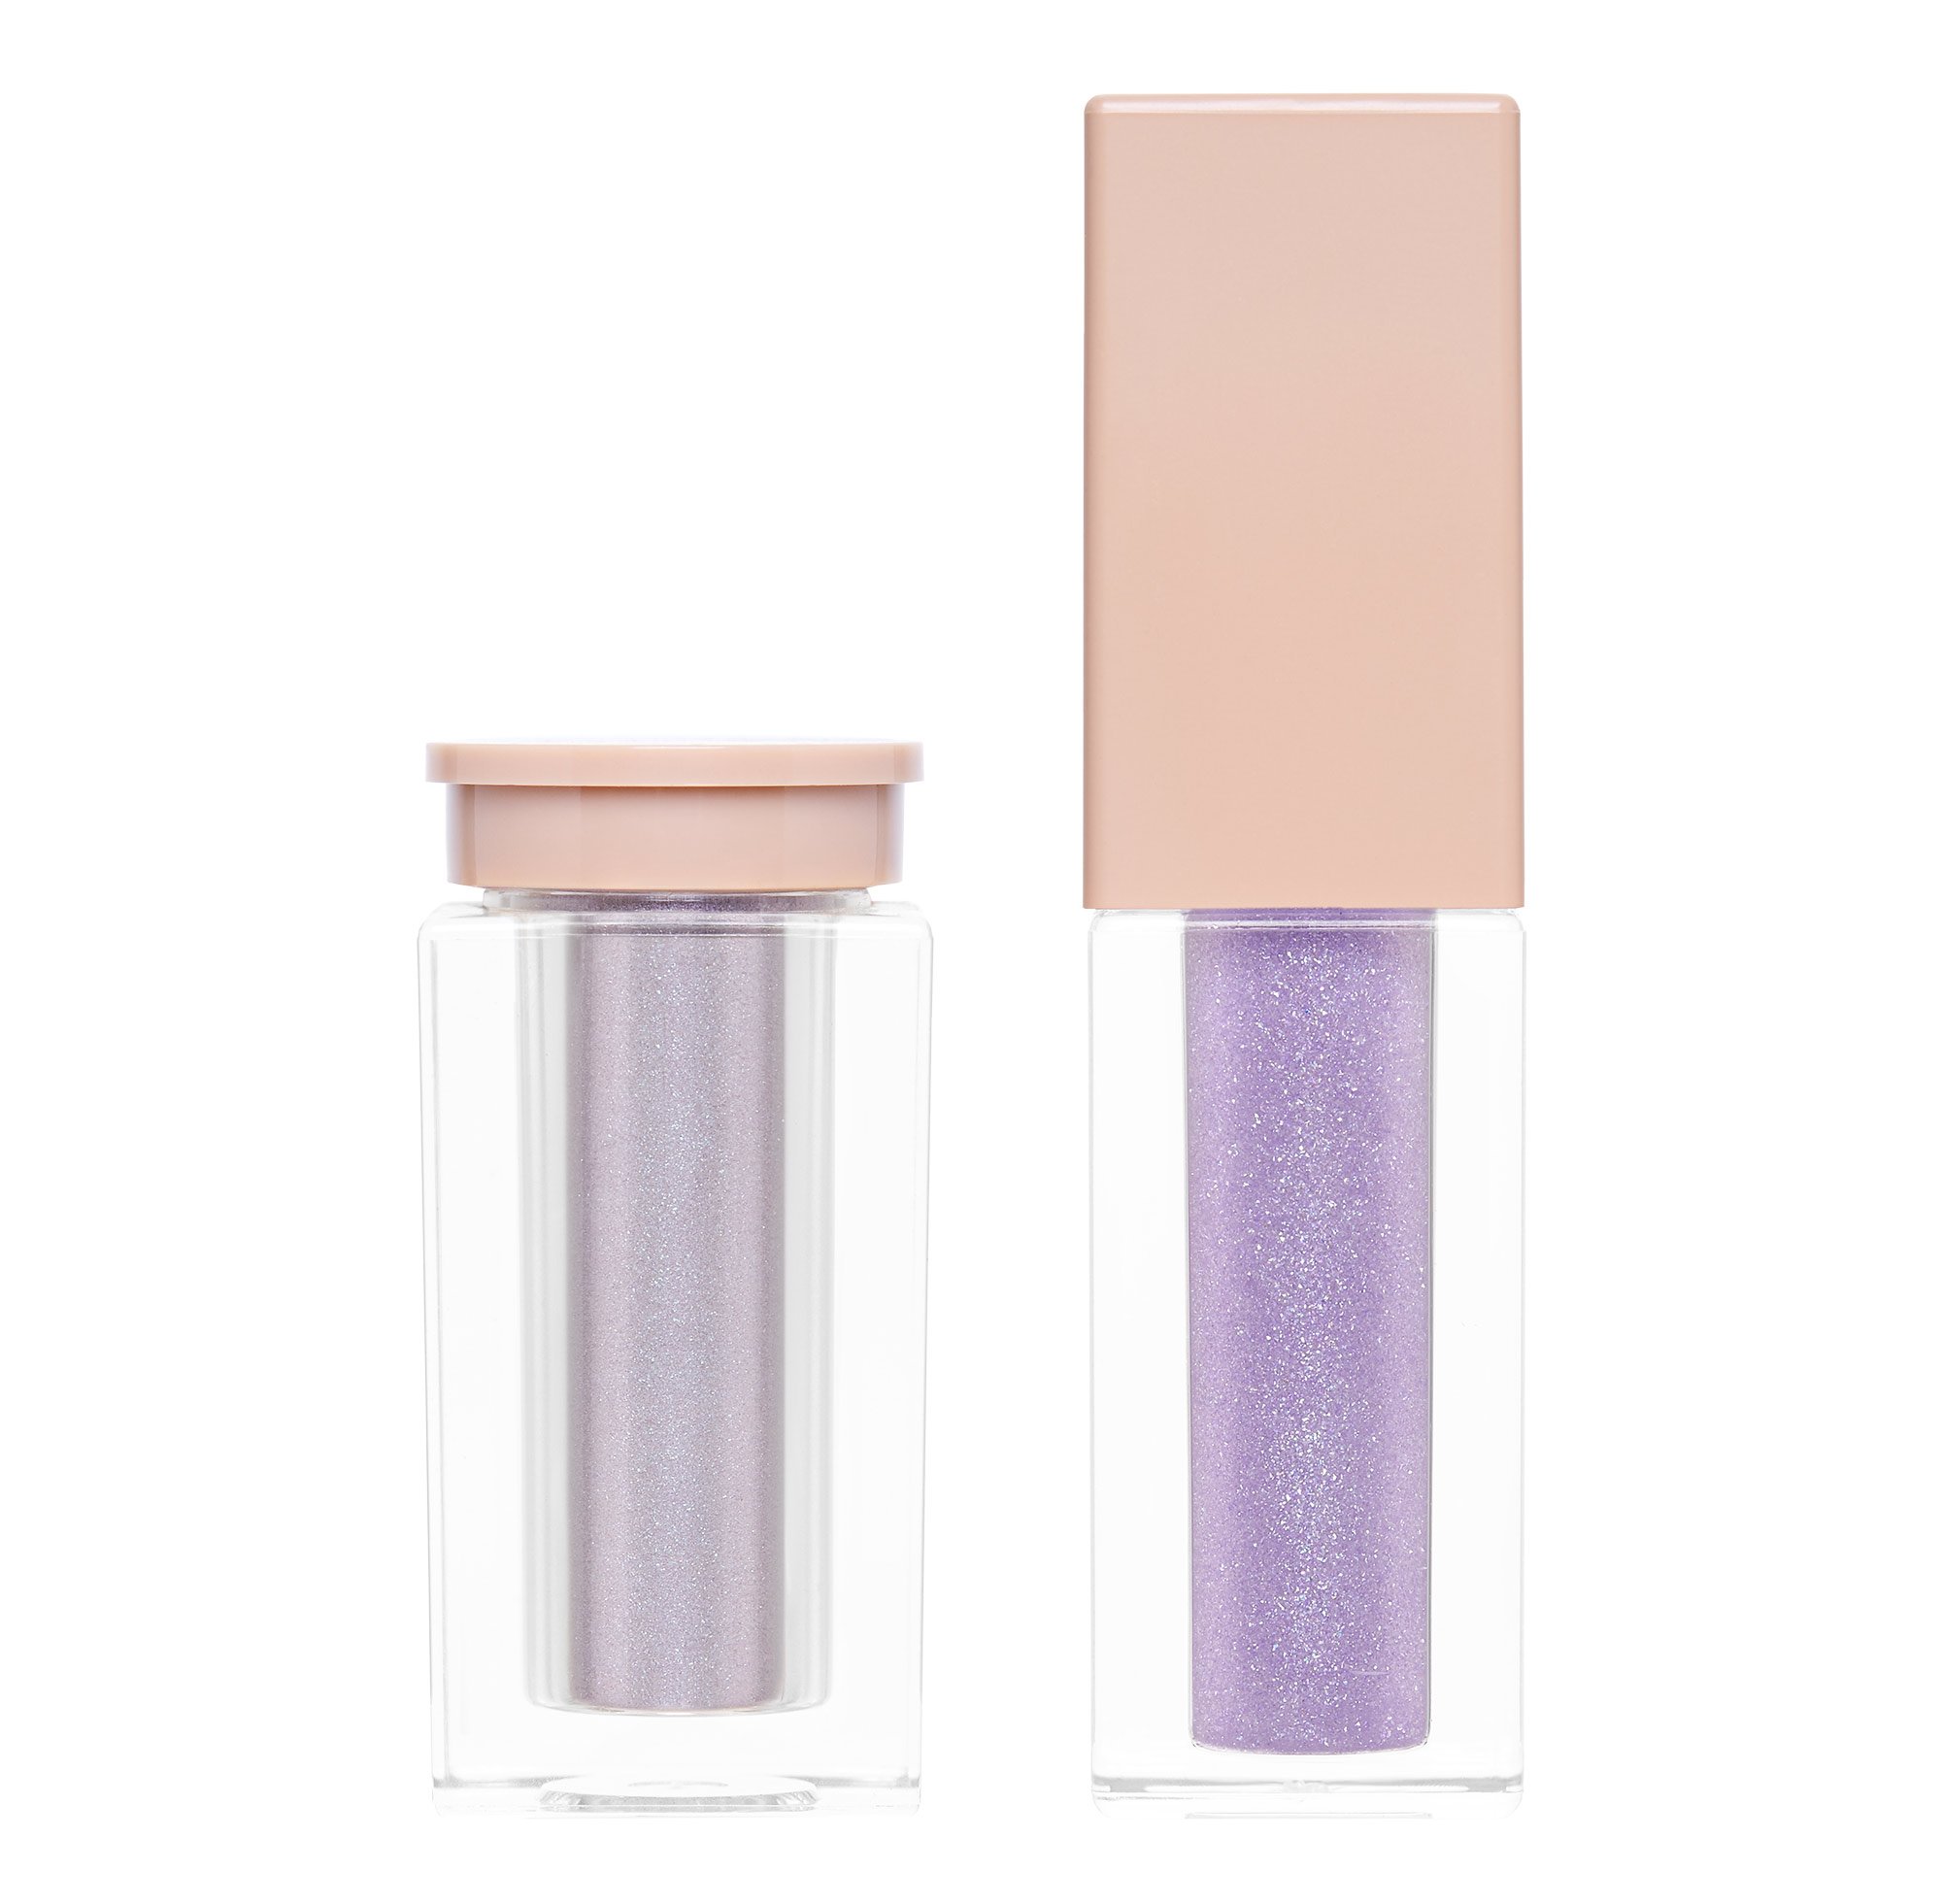 KKW-Beauty-Ultra-Light-Beam-Duo-Lavender